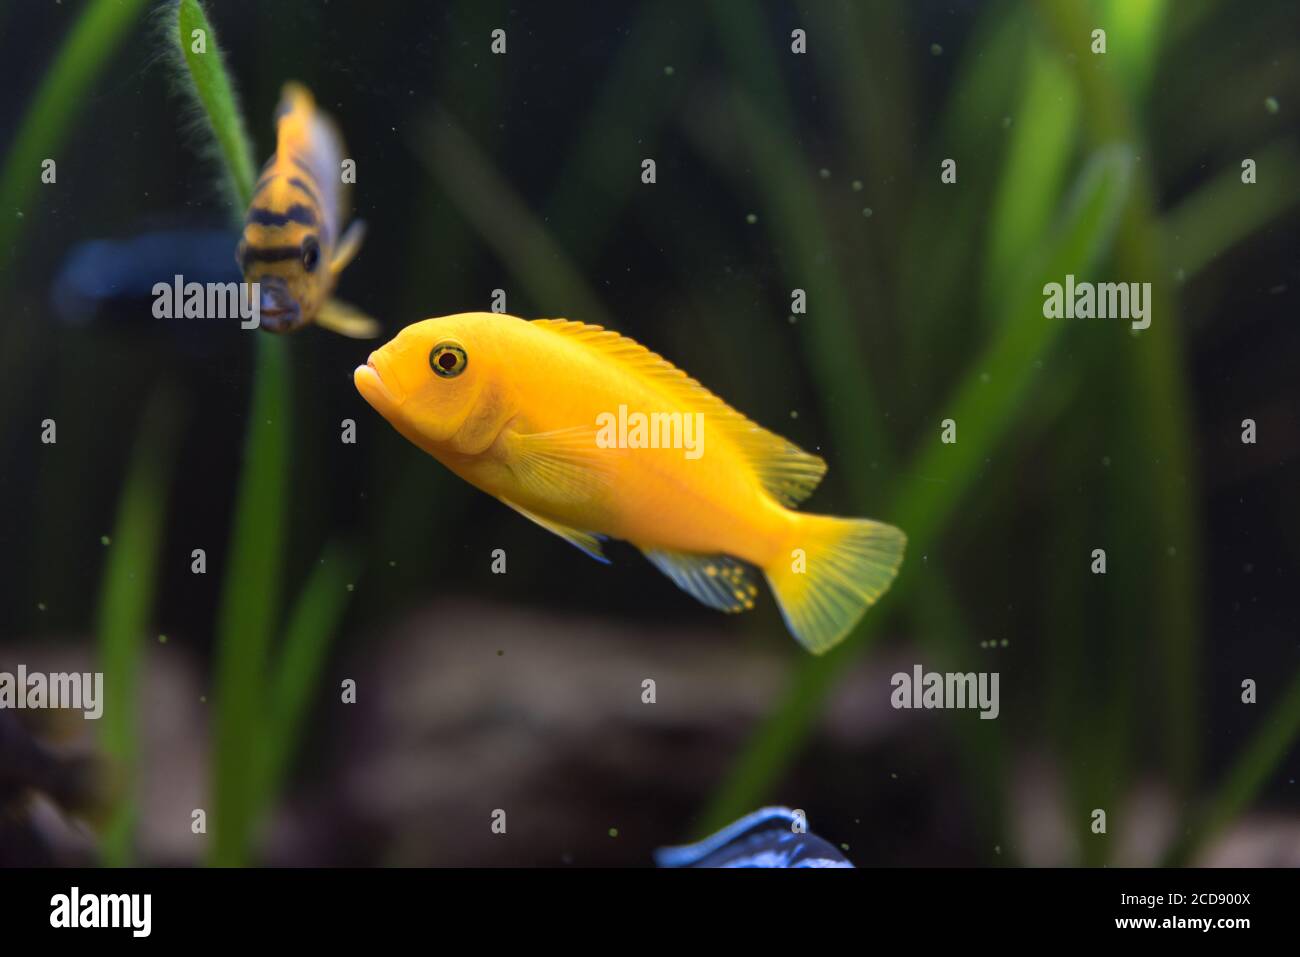 shoal of malawi perch fish in aquarium Stock Photo